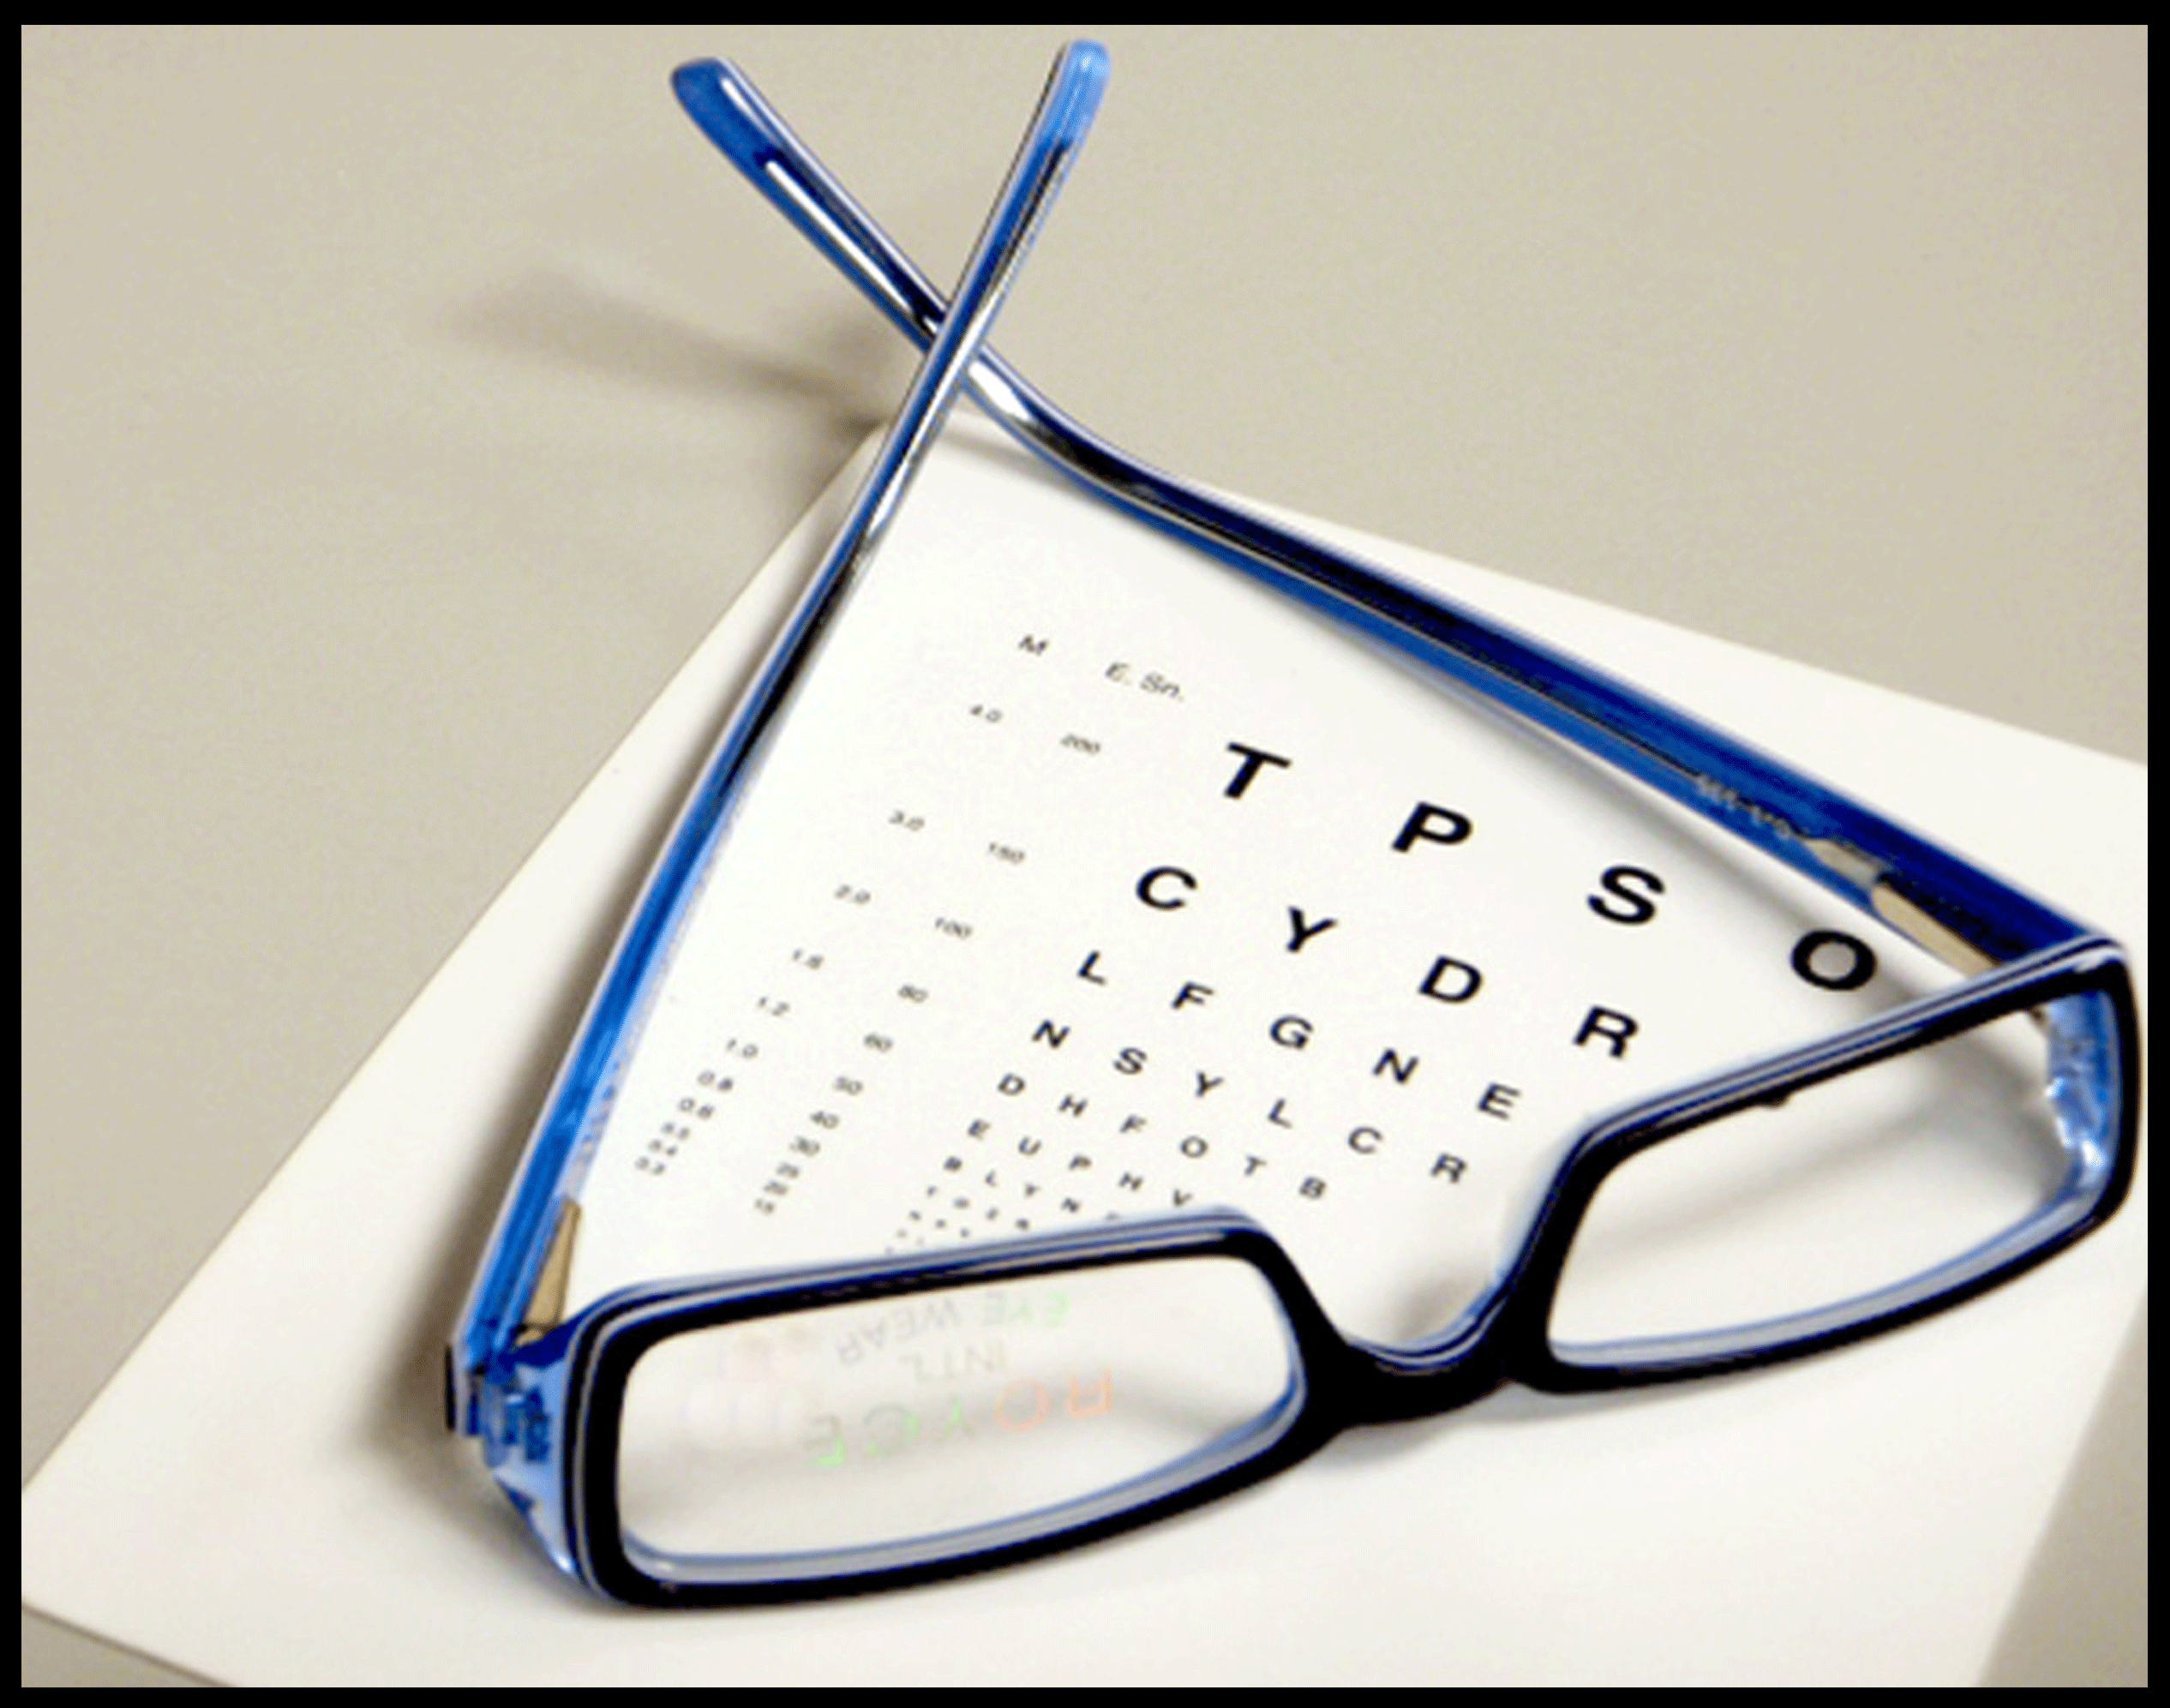 Image of eye glasses on Snellen eye chart.